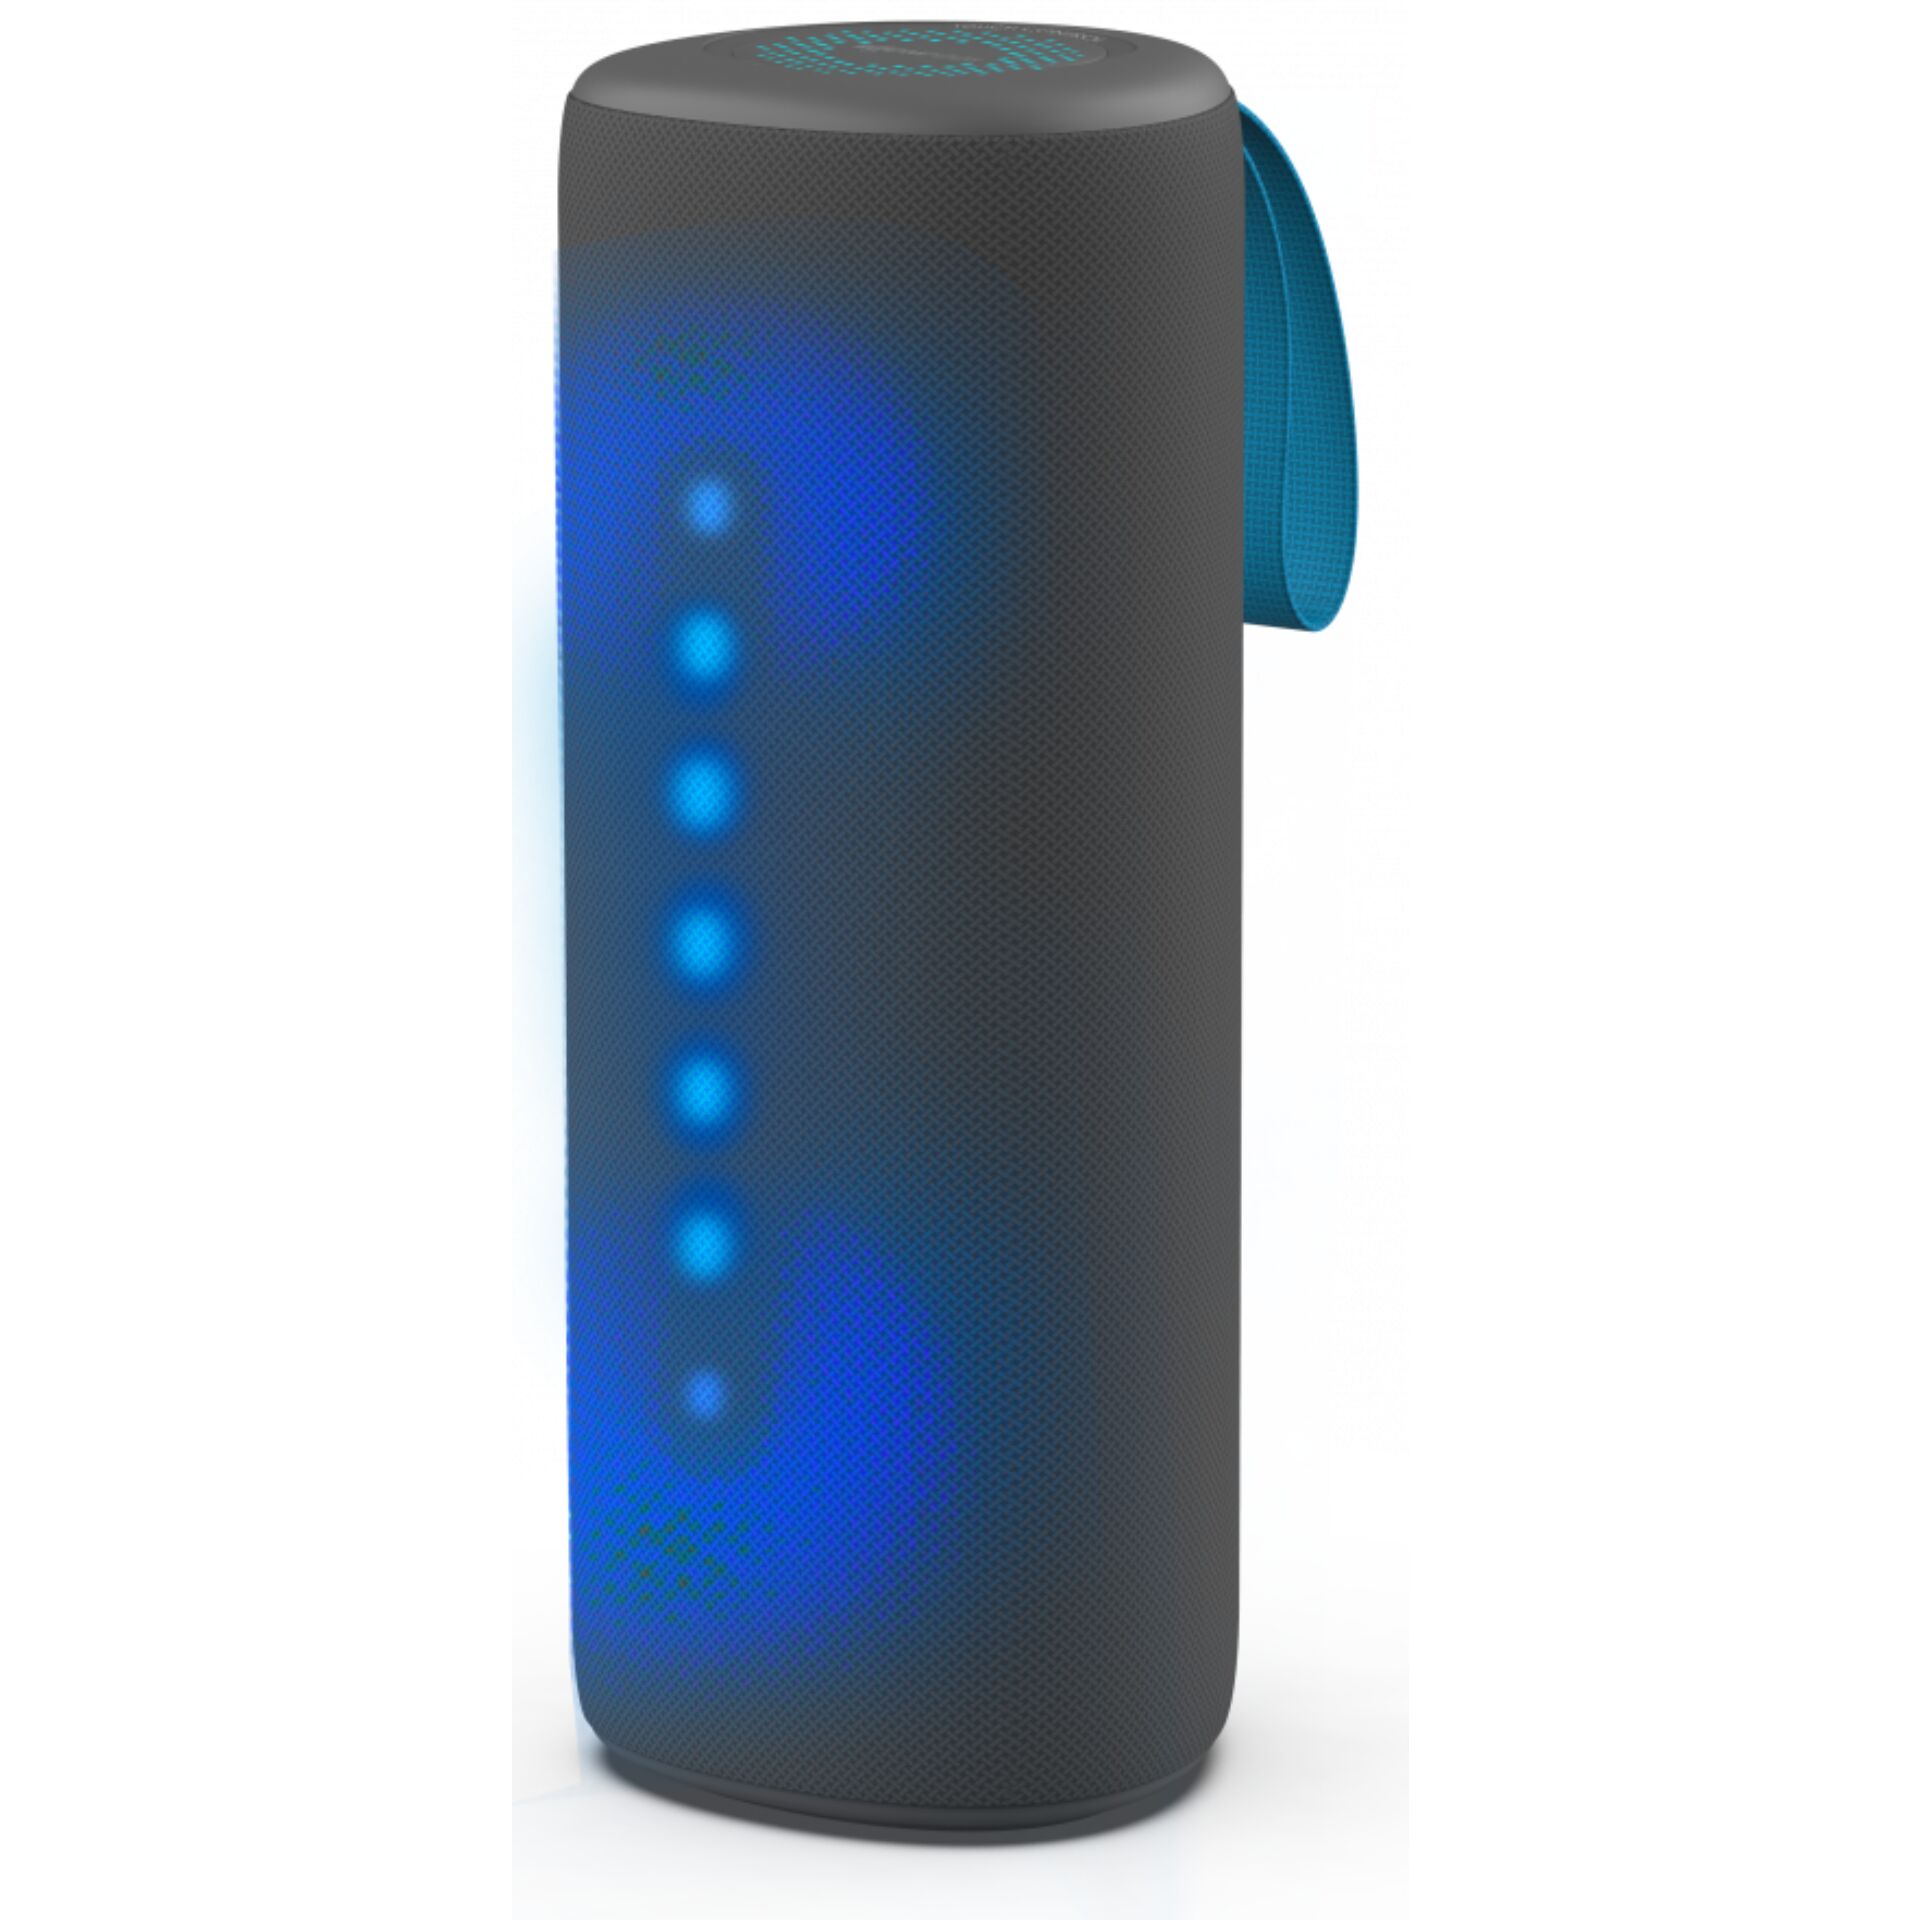 Boompods Rhythm 24 blau/grau Bluetooth-Lautsprecher, 24W Peak, wasserfest (IPX5), Stereo-Pairing